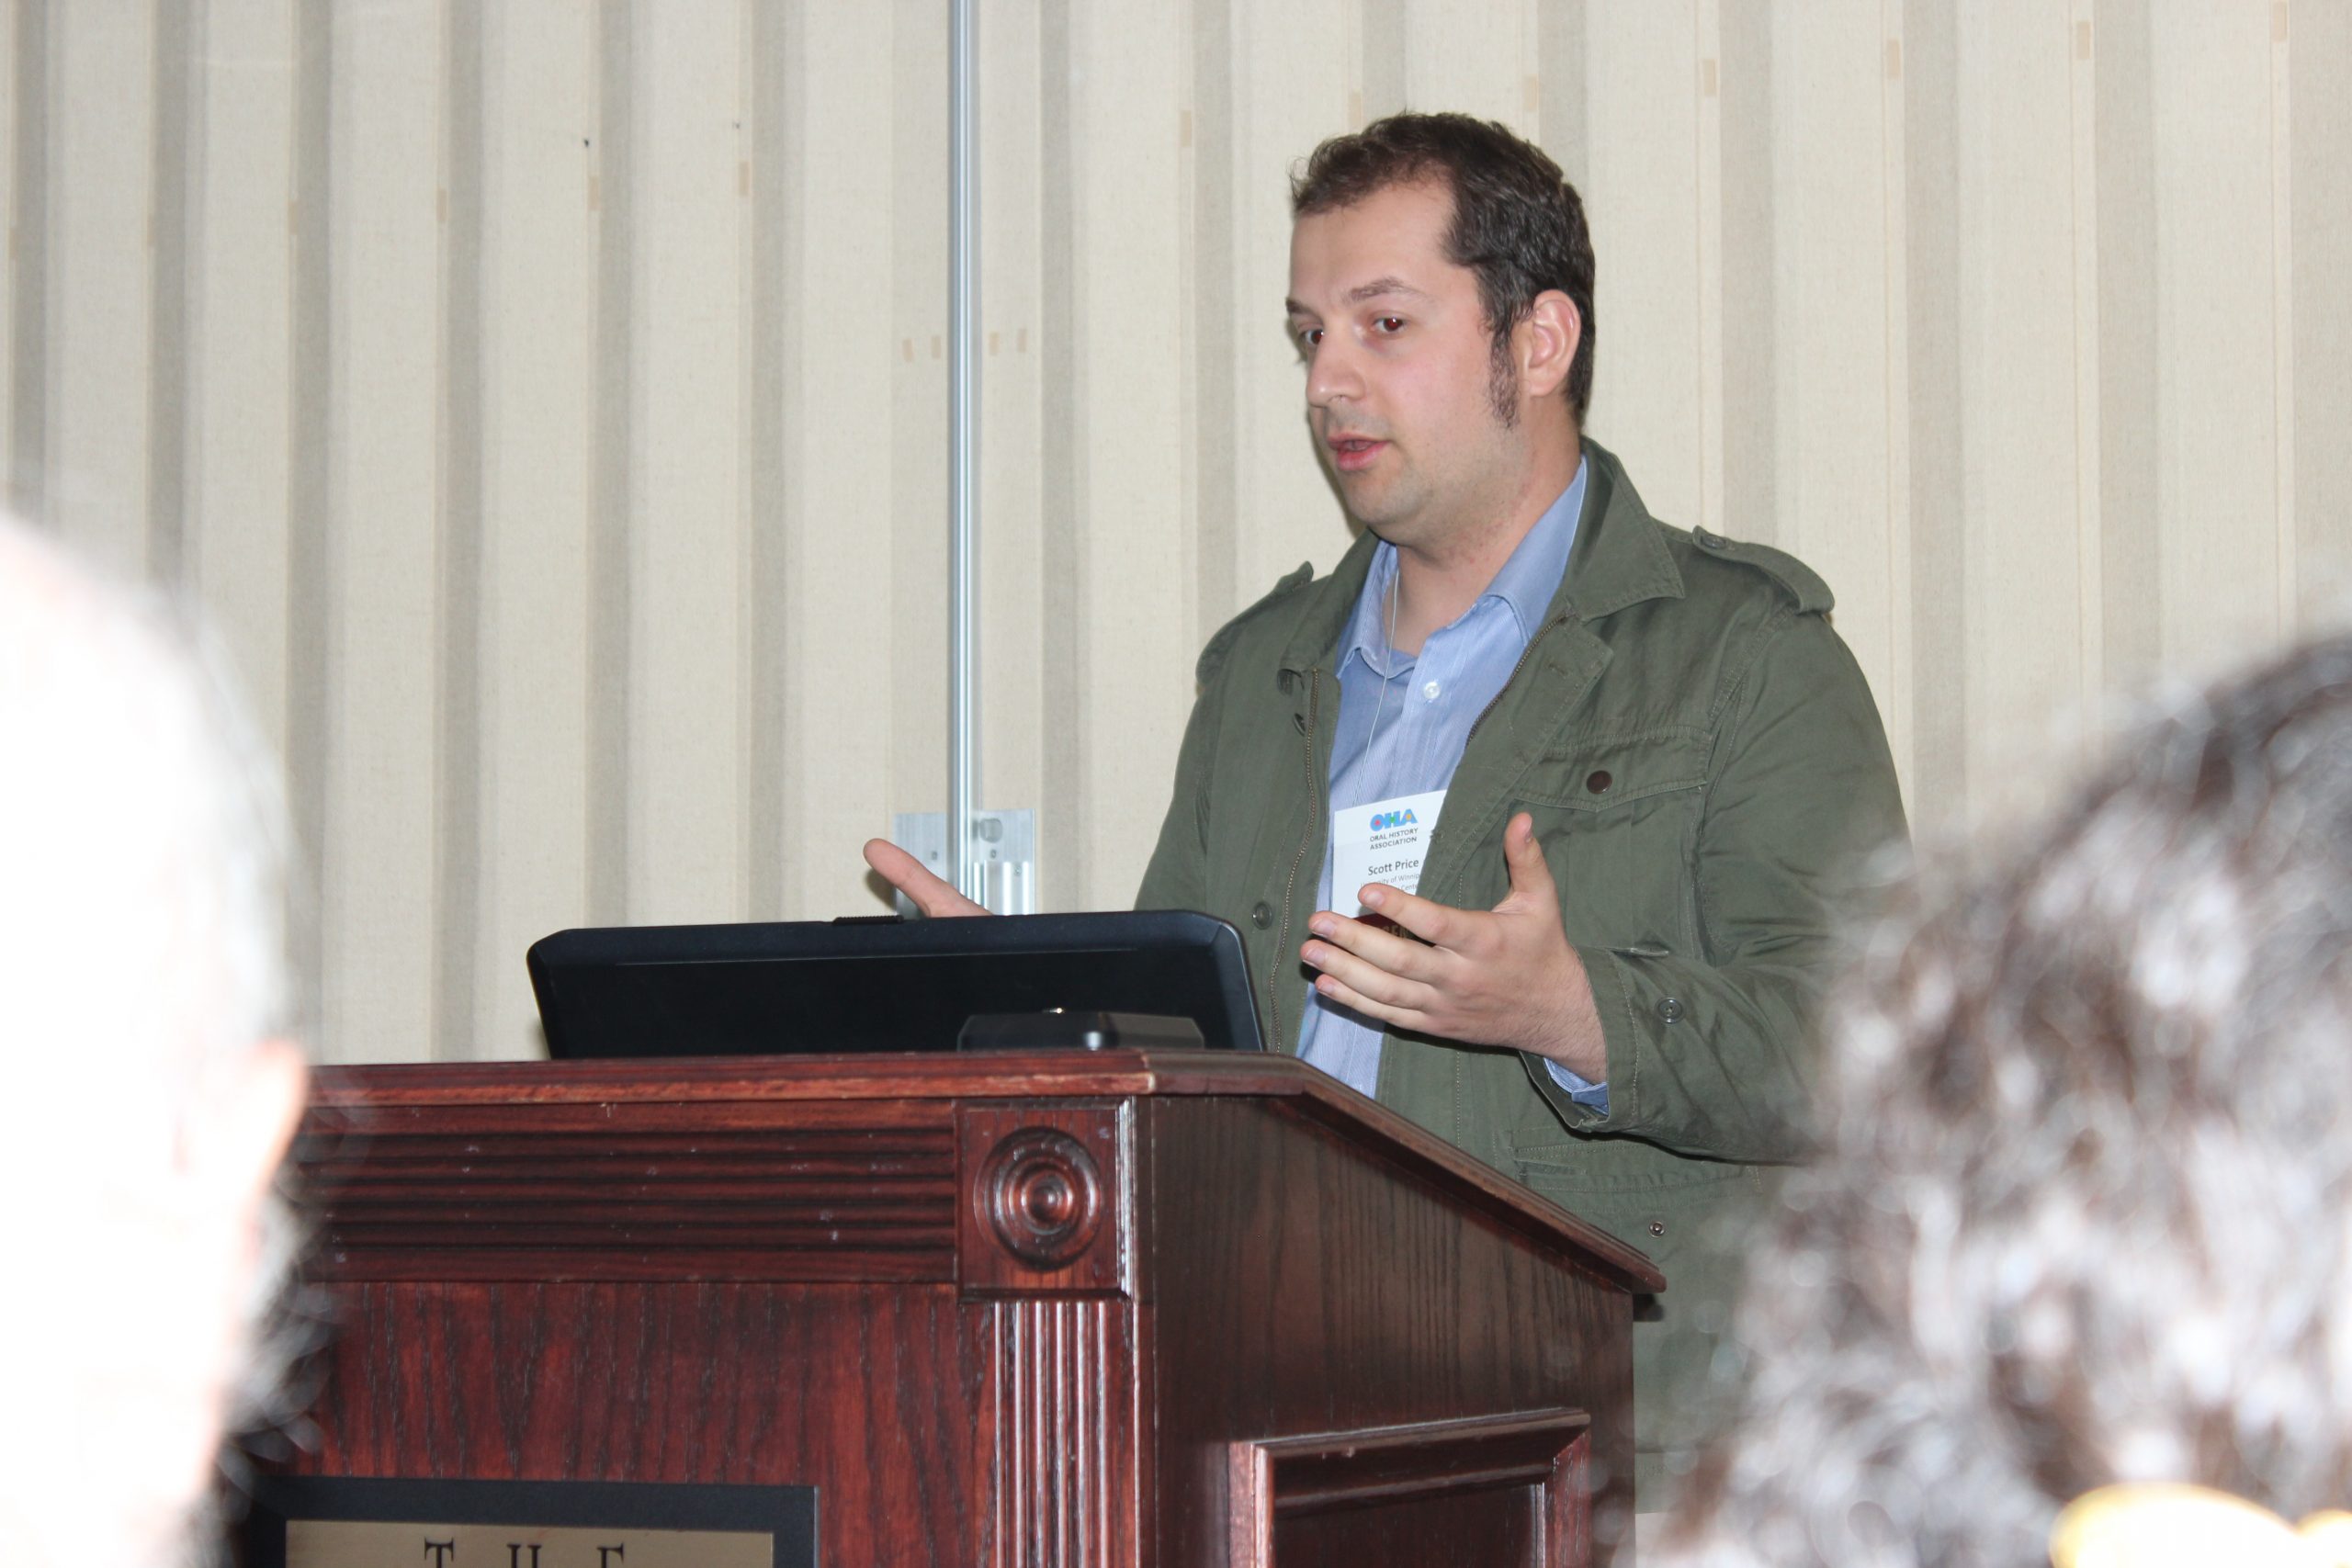 OHC Researcher Scott Price presenting at a podium.